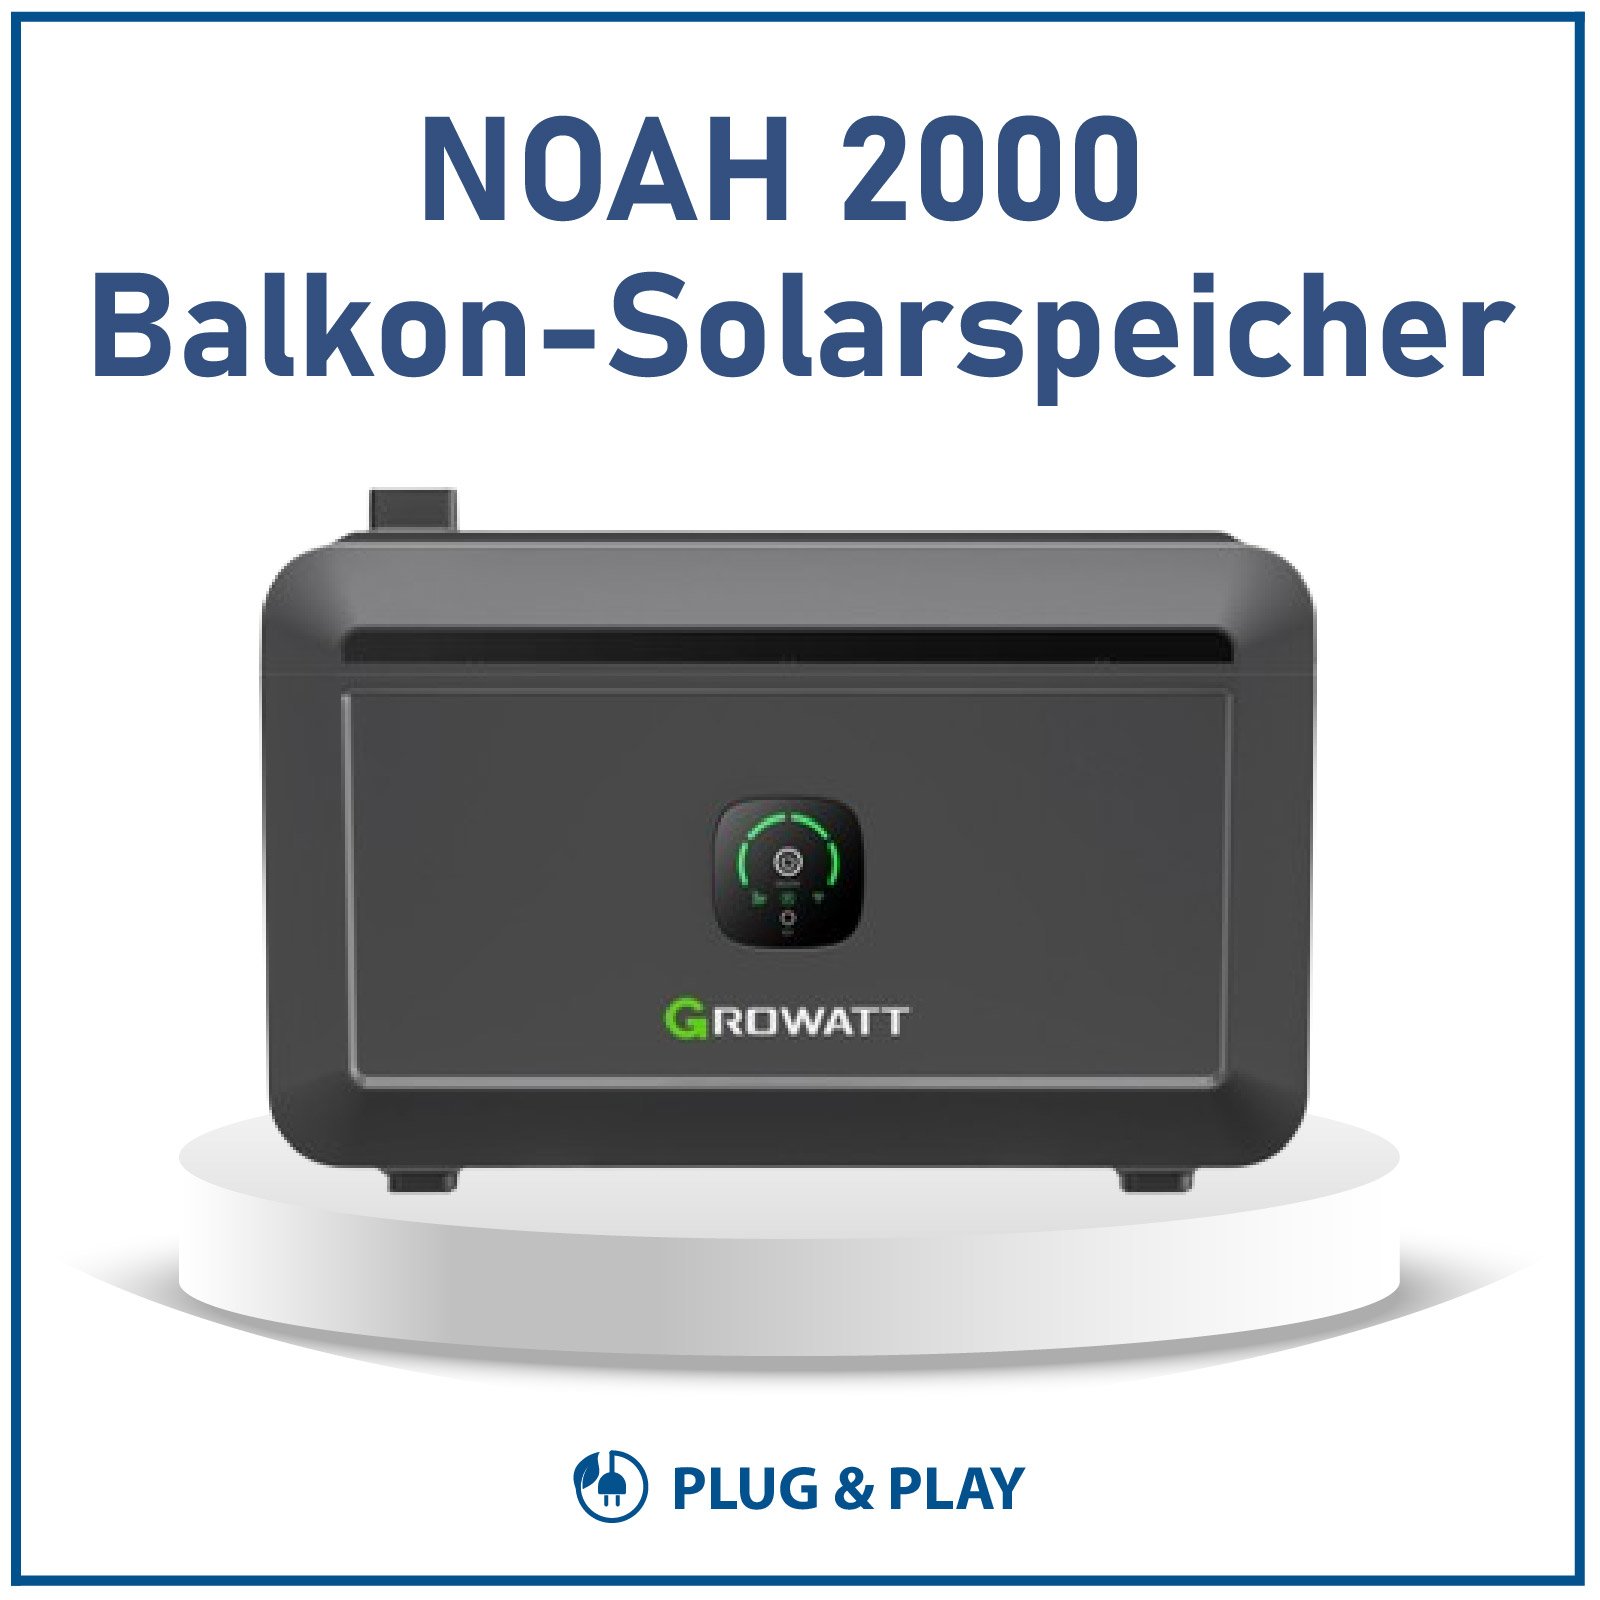 Growatt NOAH 2000 Balkon Solar Speicher